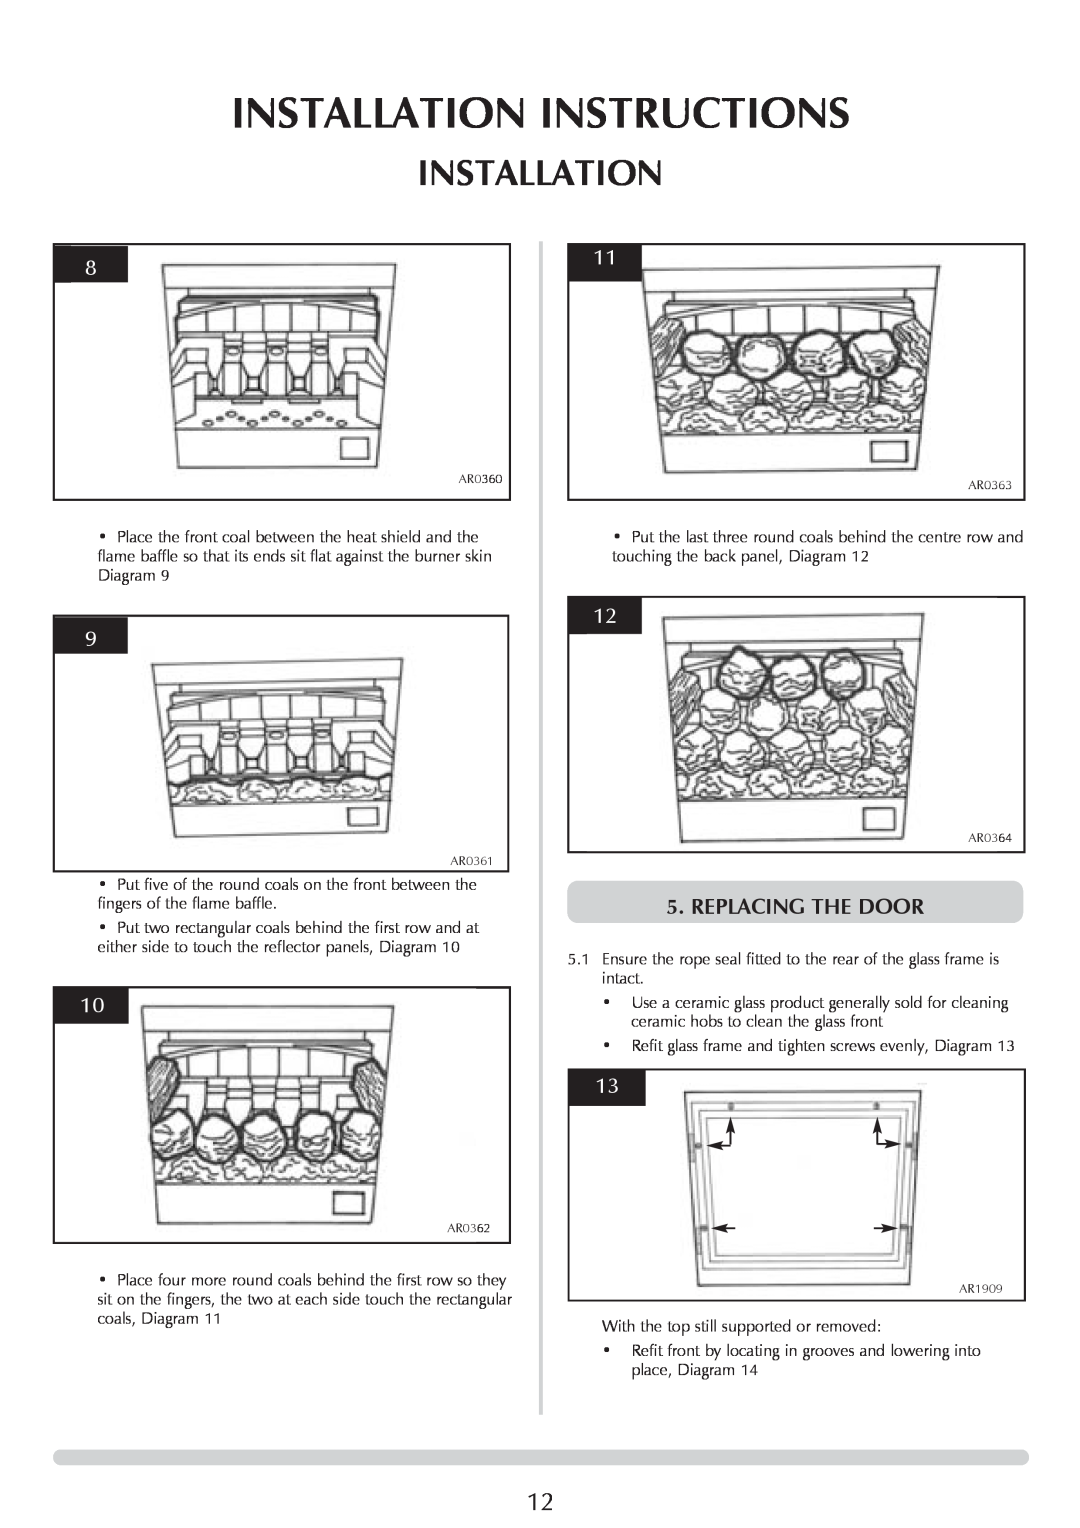 Stovax Huntingdon 30 manual Installation Instructions, Replacing The Door 